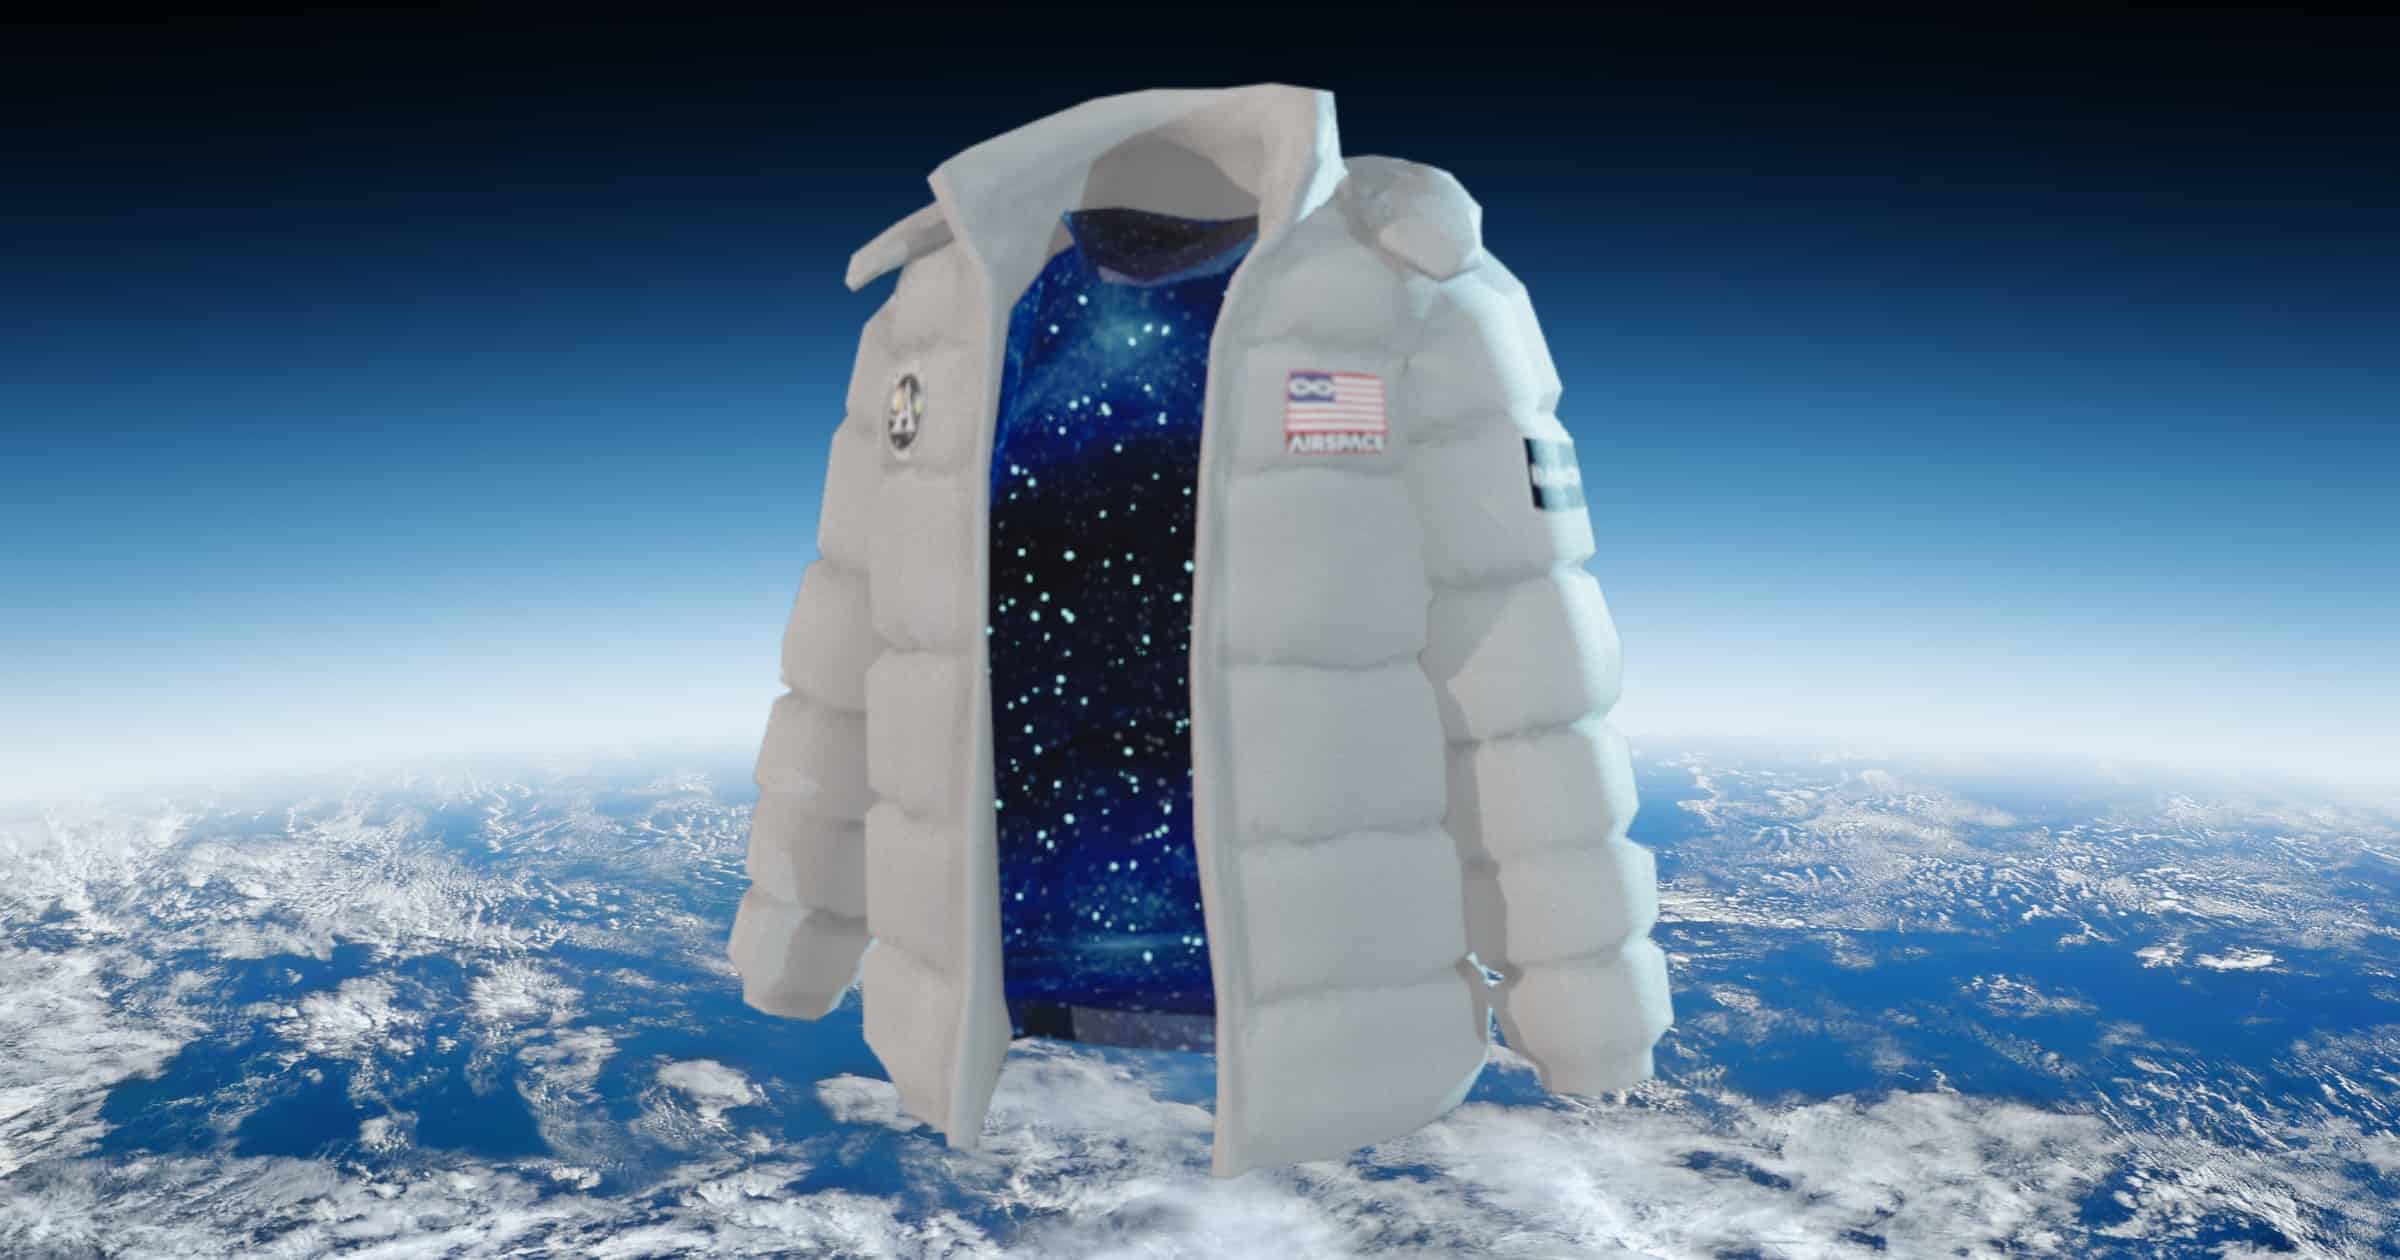 Decentraland Apollo 11-52 space wearables